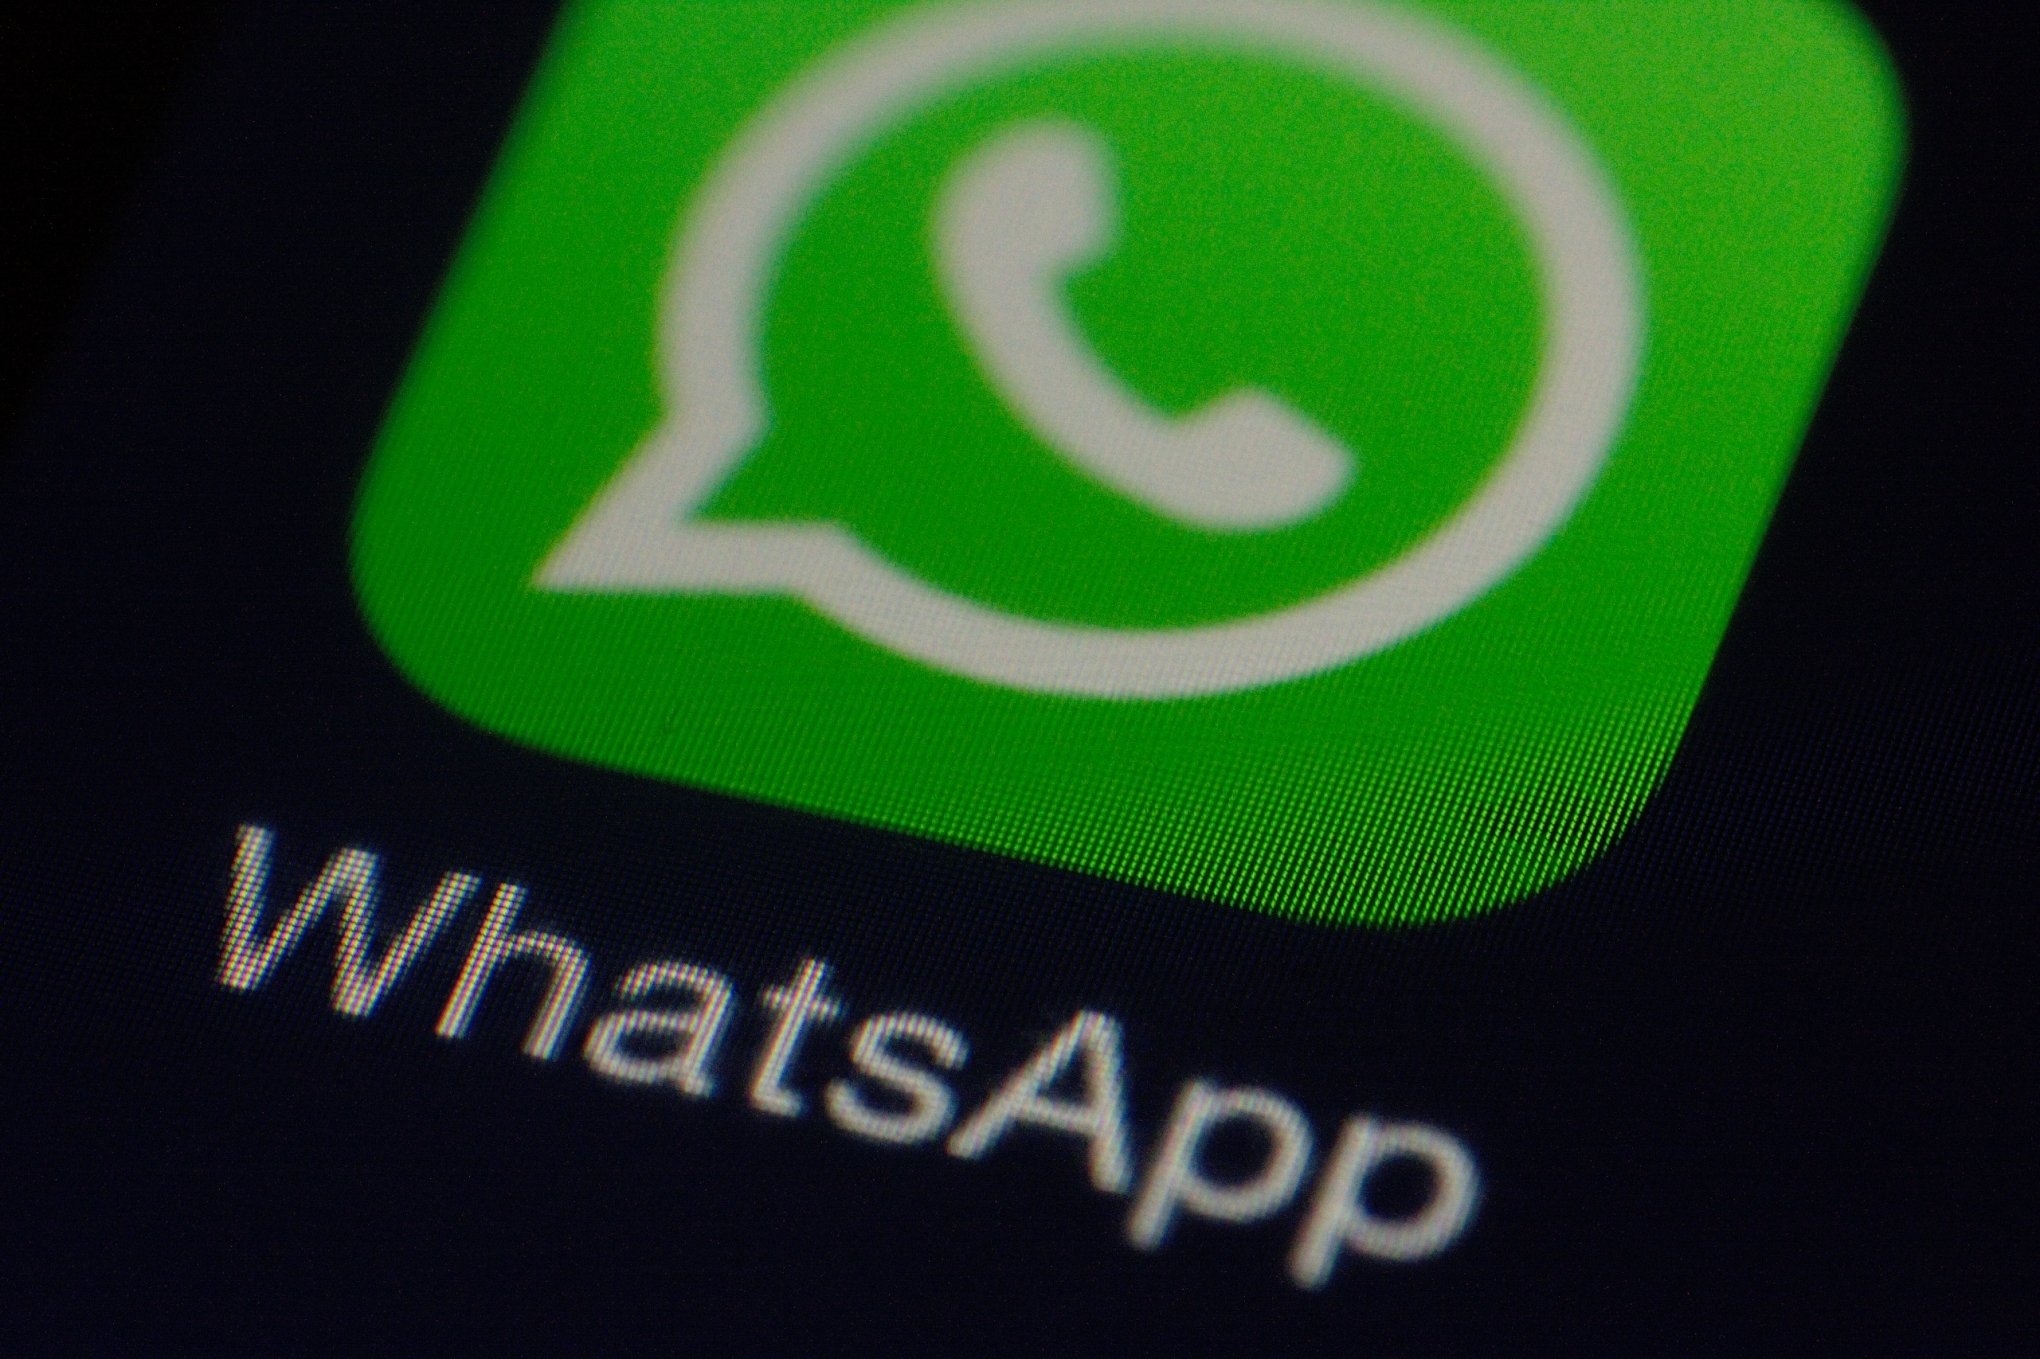 WhatsApp testa proibir capturas de tela de fotos do perfil de usuários; entenda